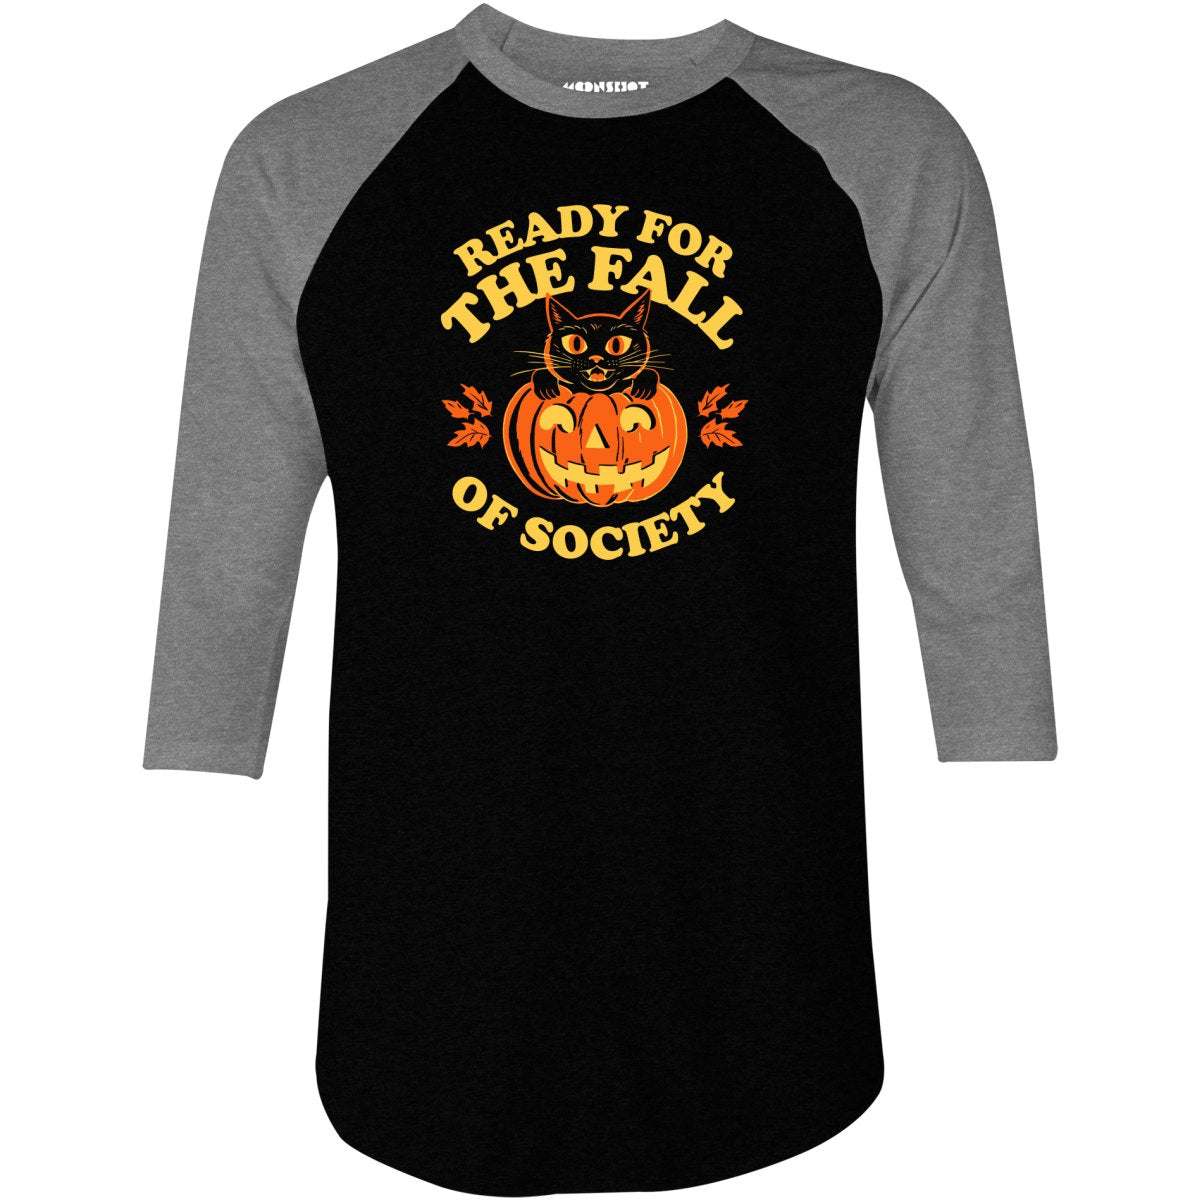 Ready For The Fall of Society - 3/4 Sleeve Raglan T-Shirt